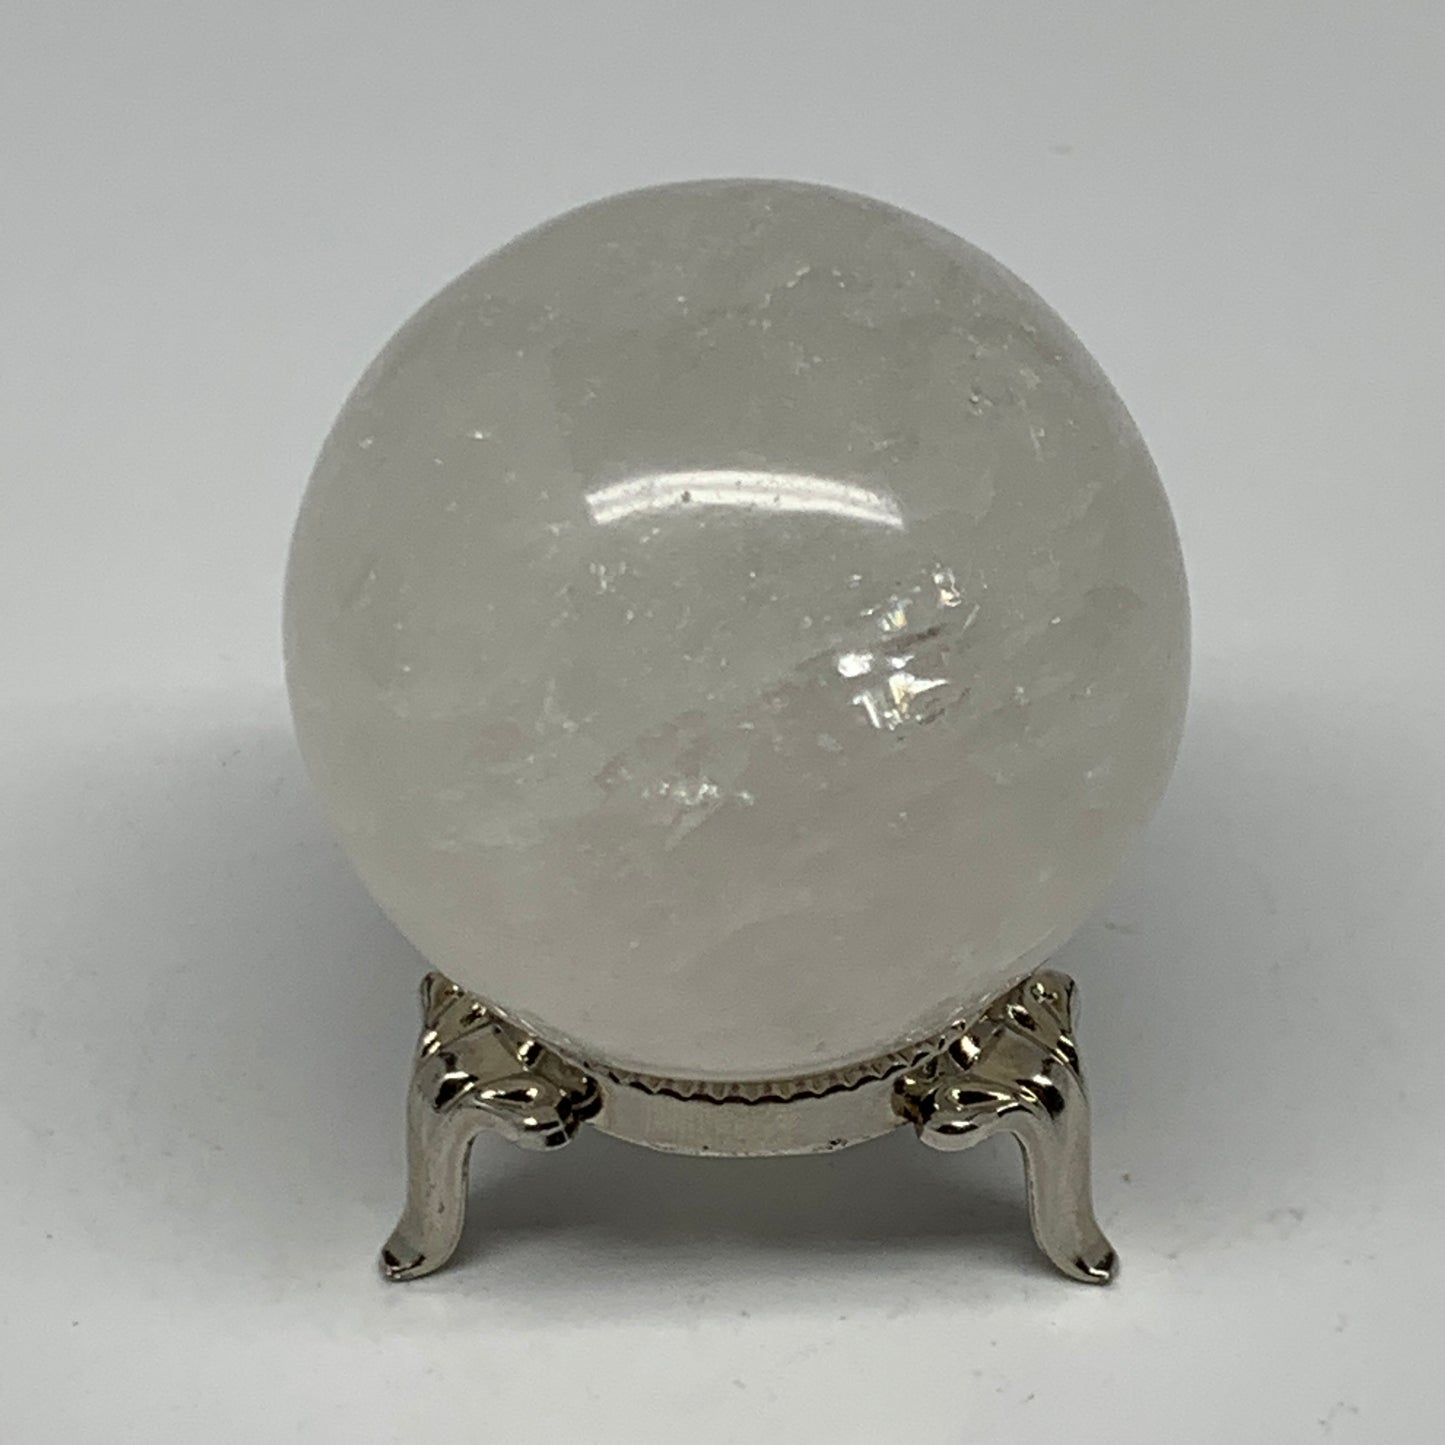 159.9g, 1.9" (48mm), Natural Quartz Sphere Crystal Gemstone Ball @Brazil, B22243